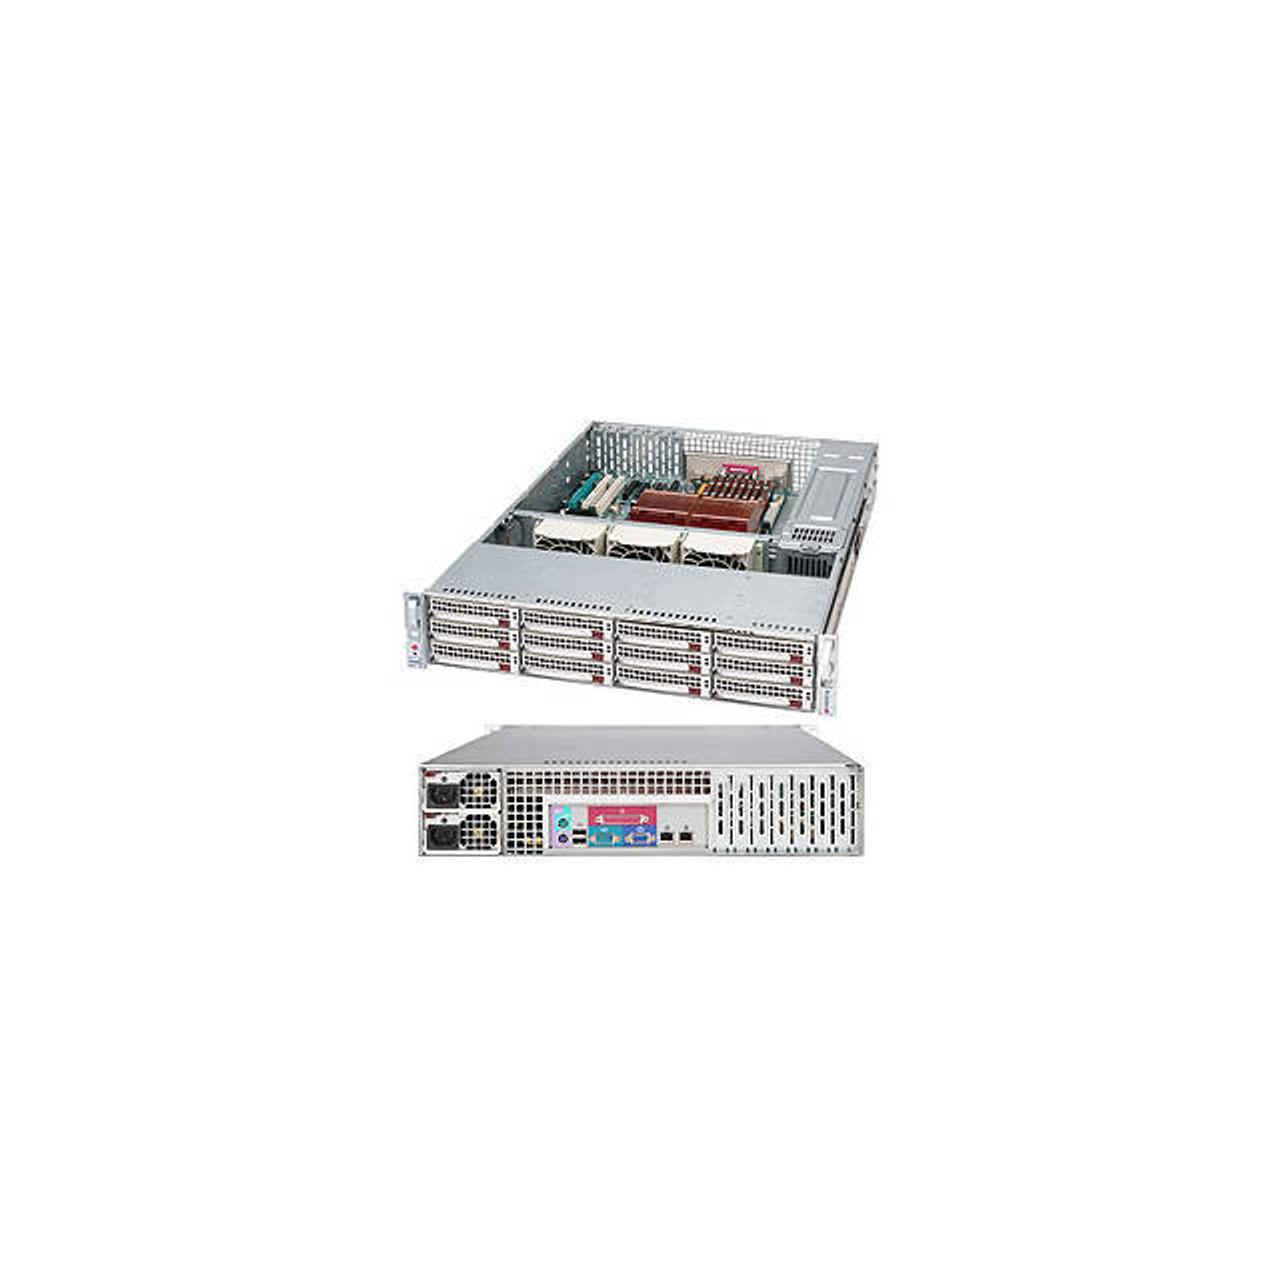 Supermicro CSE-826TQ-R800LPB 2U Rackmount Server Chassis (Black)